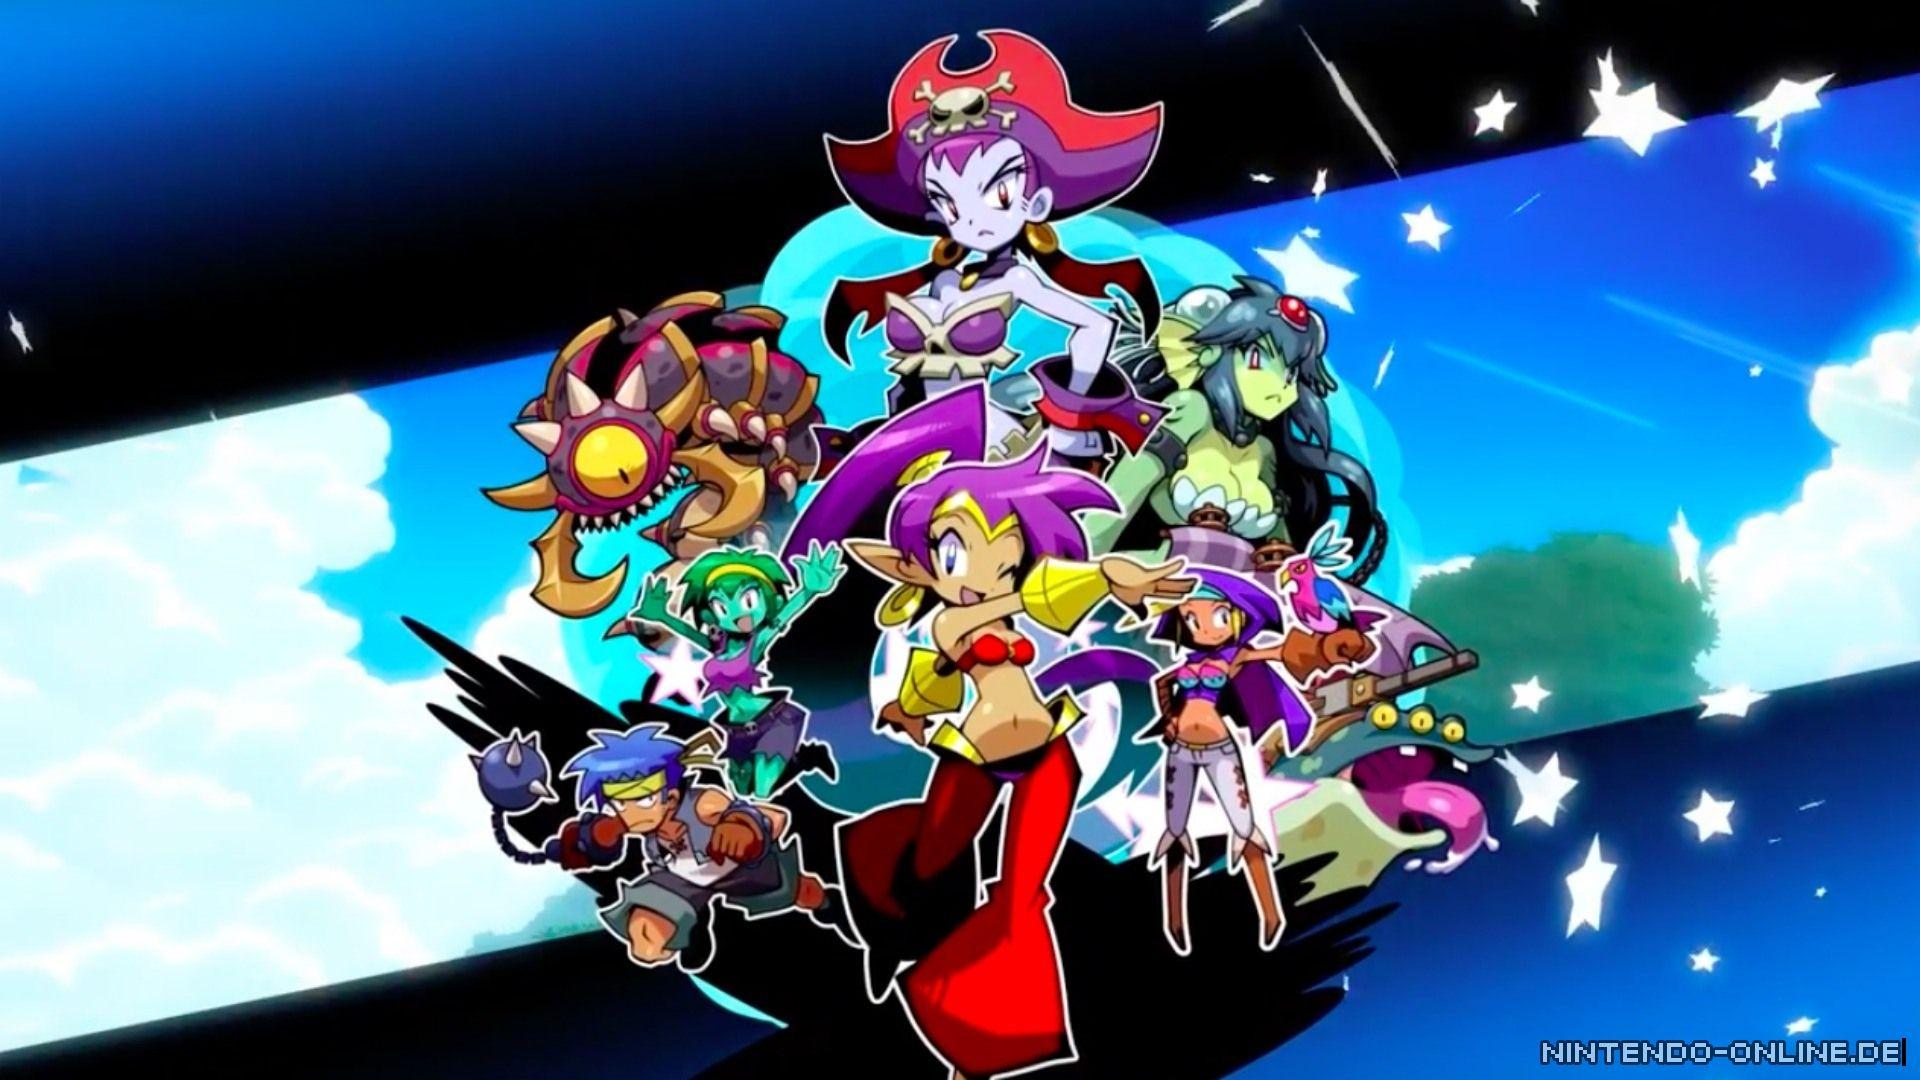 Download Shantae Riskys Revenge wallpapers for mobile phone free  Shantae Riskys Revenge HD pictures